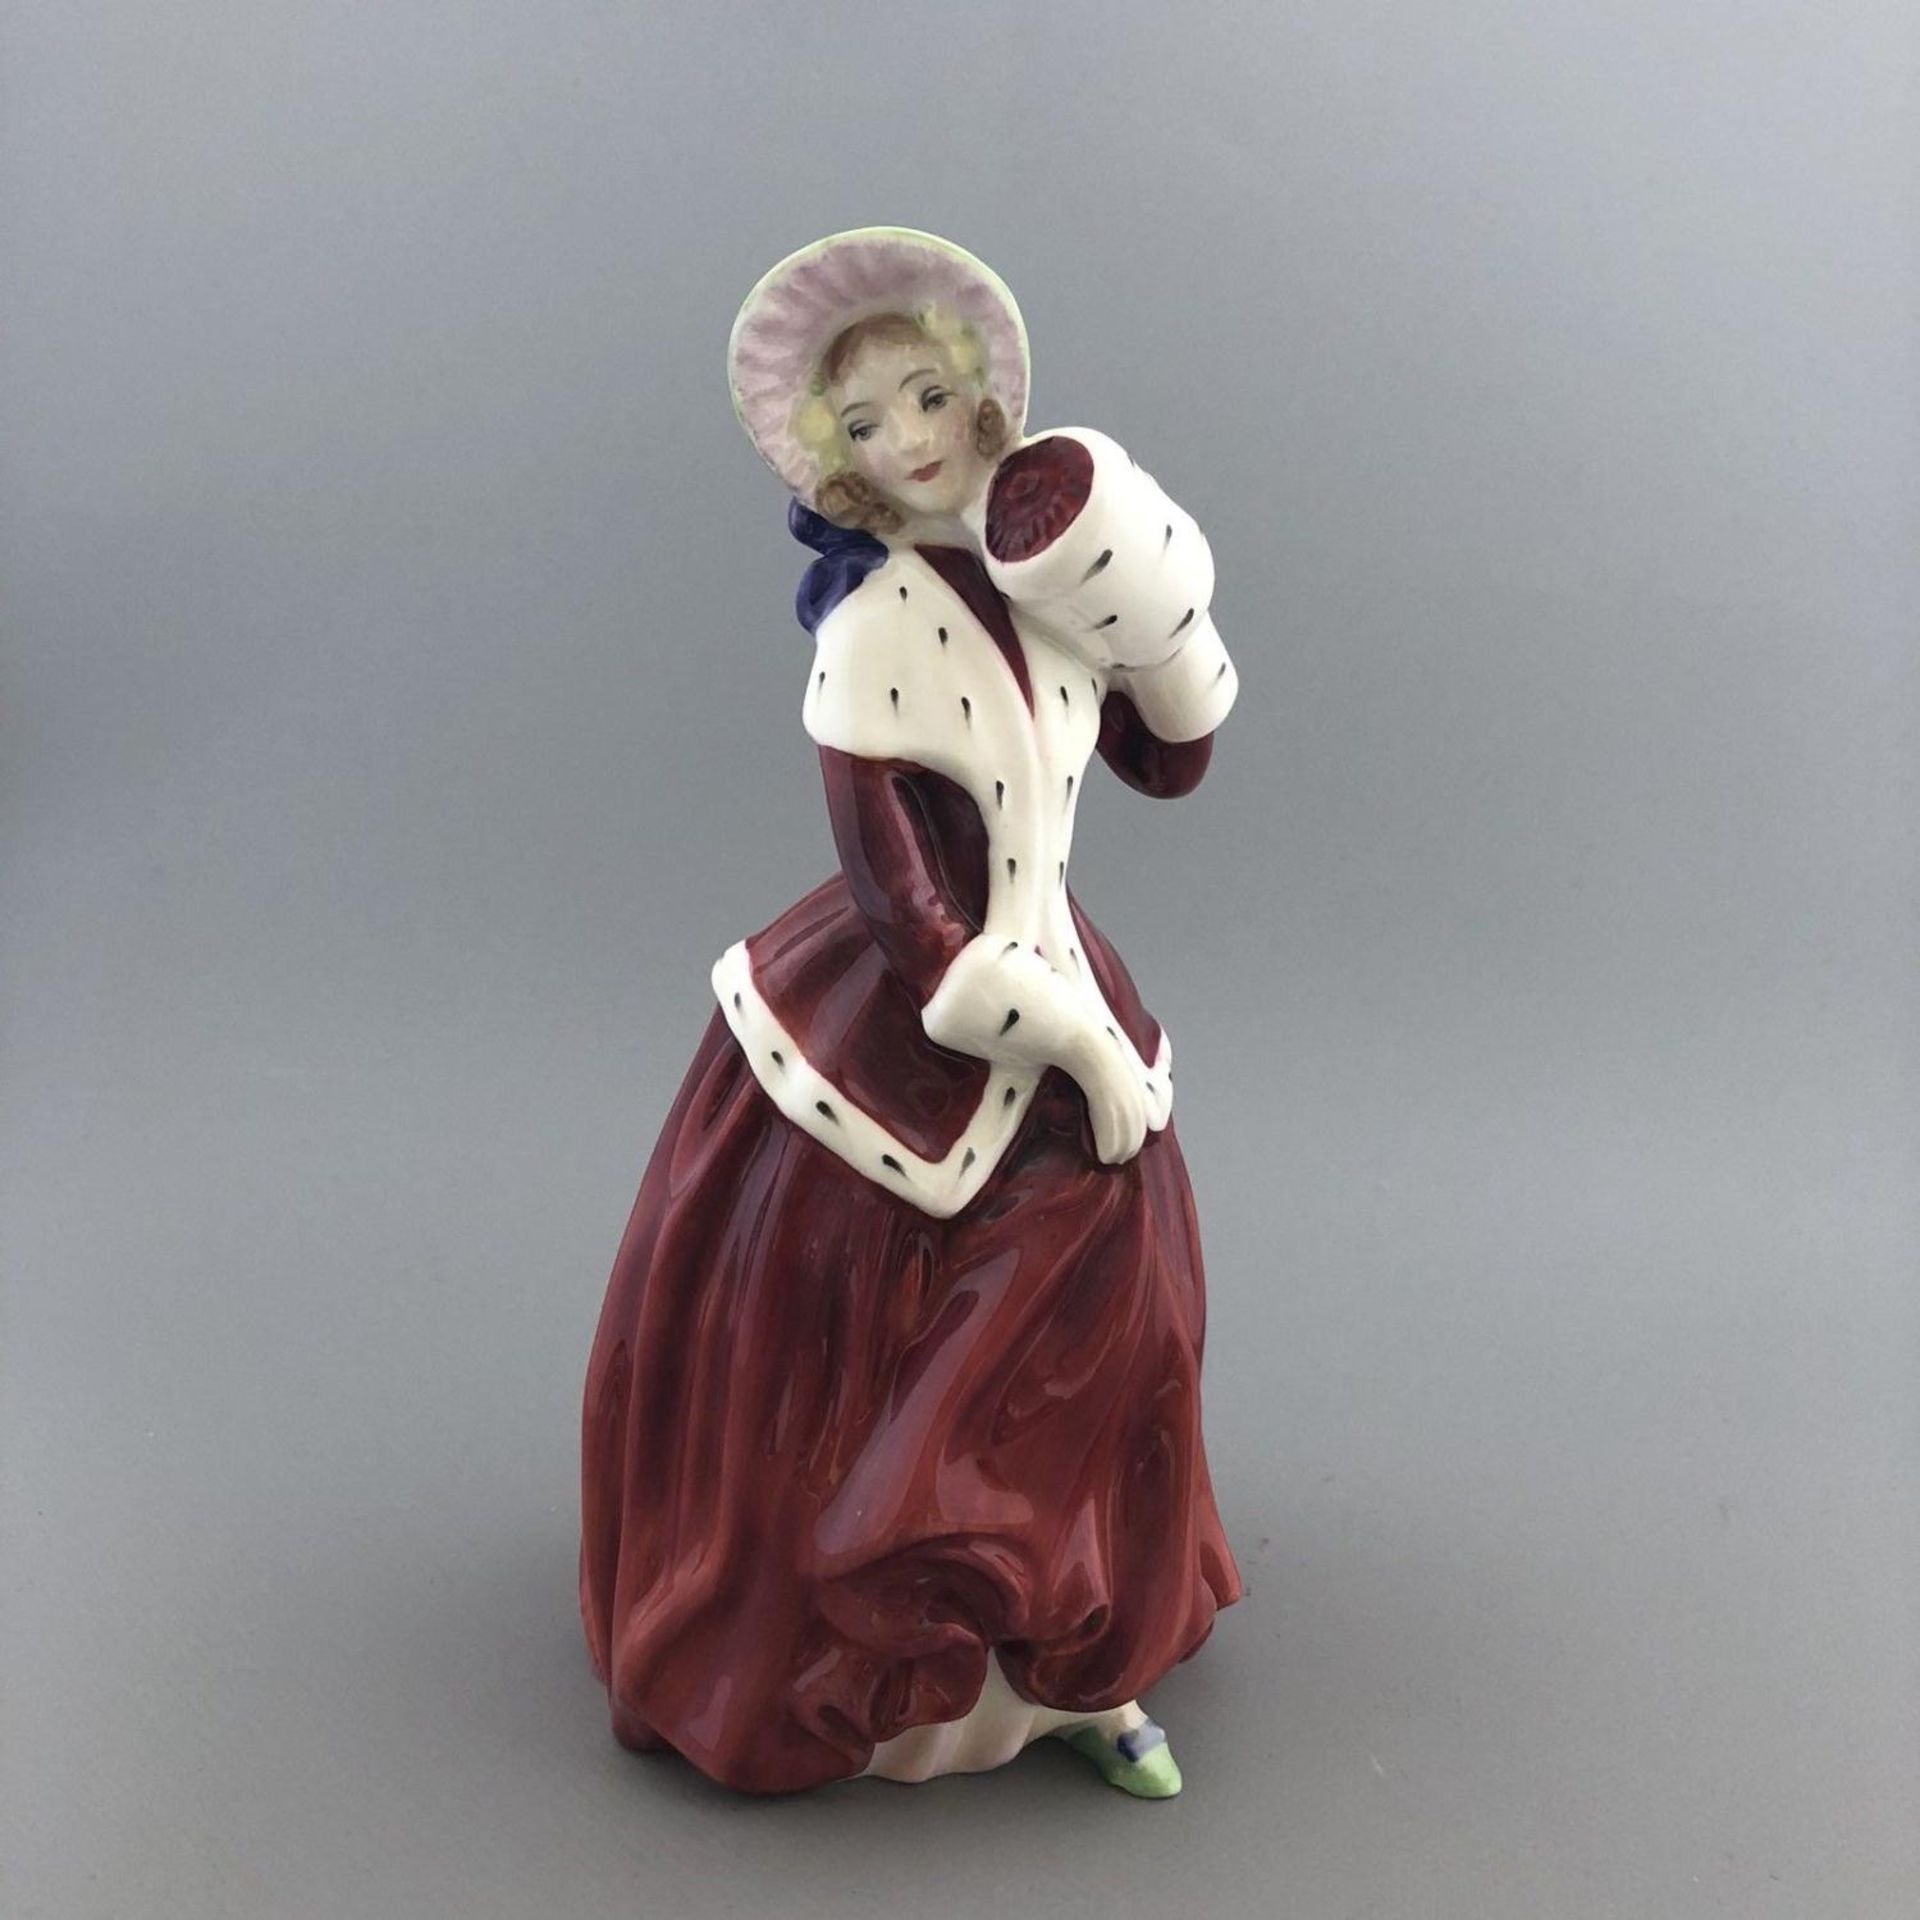 English Porcelain Figurine "Christmas Morn" - Royal Doulton HN 1992